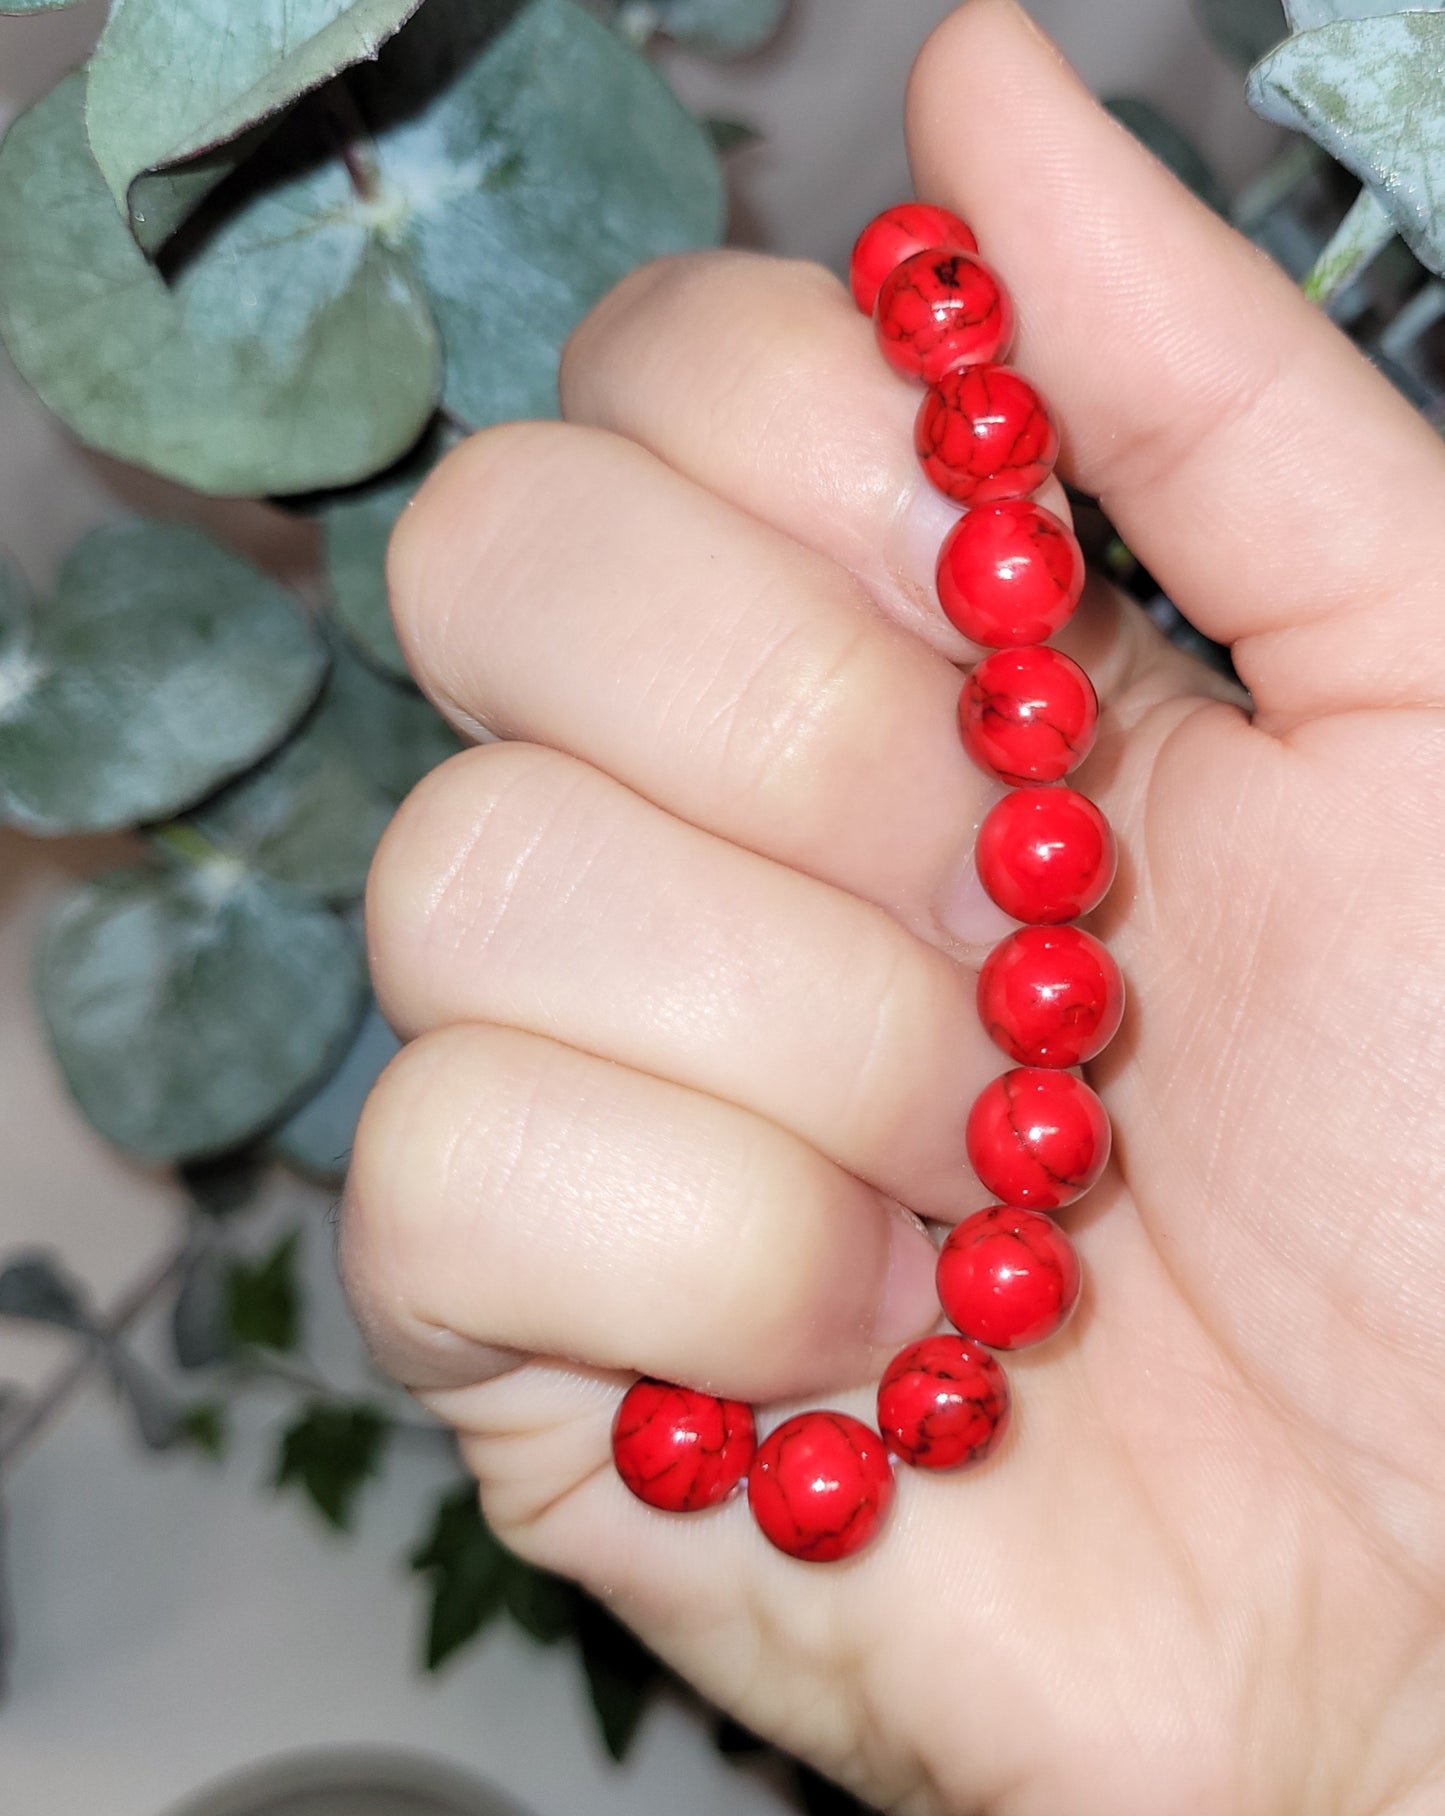 Red Turquoise 8mm Bracelet